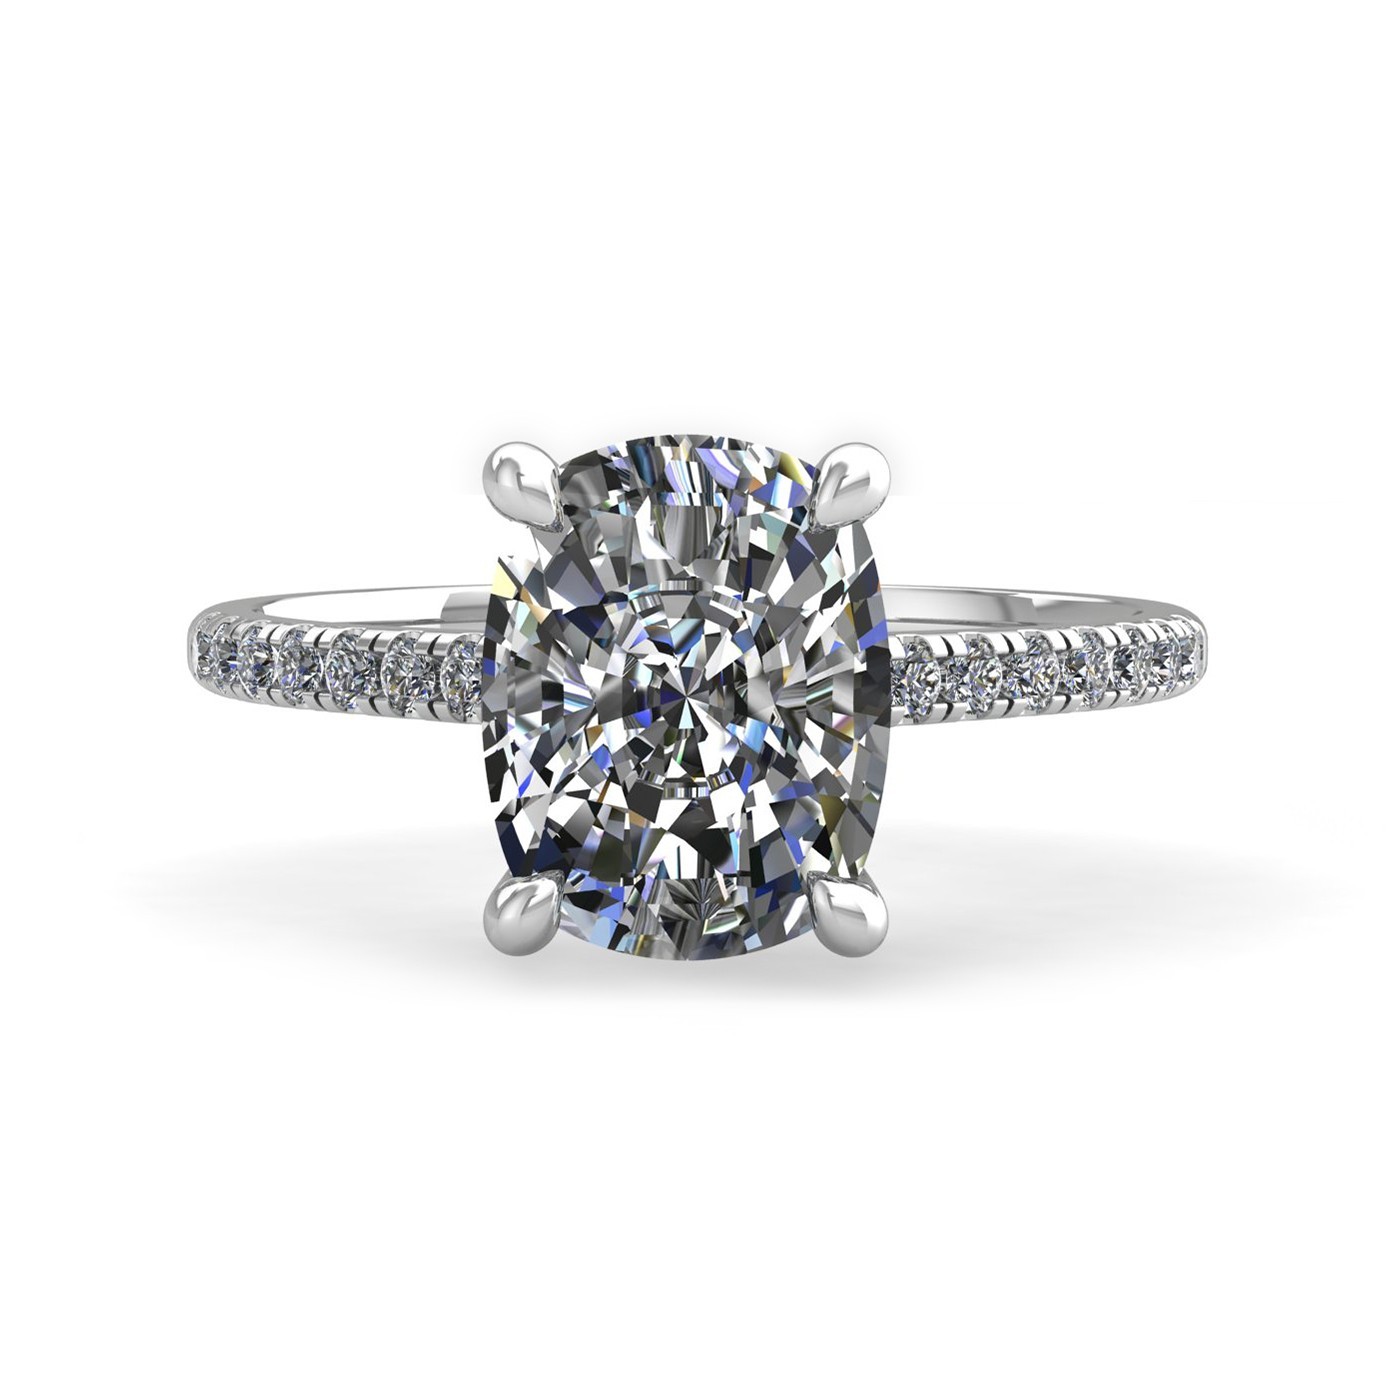 18k white gold  4 prongs cushion cut diamond engagement ring with whisper thin pavÉ set band Photos & images